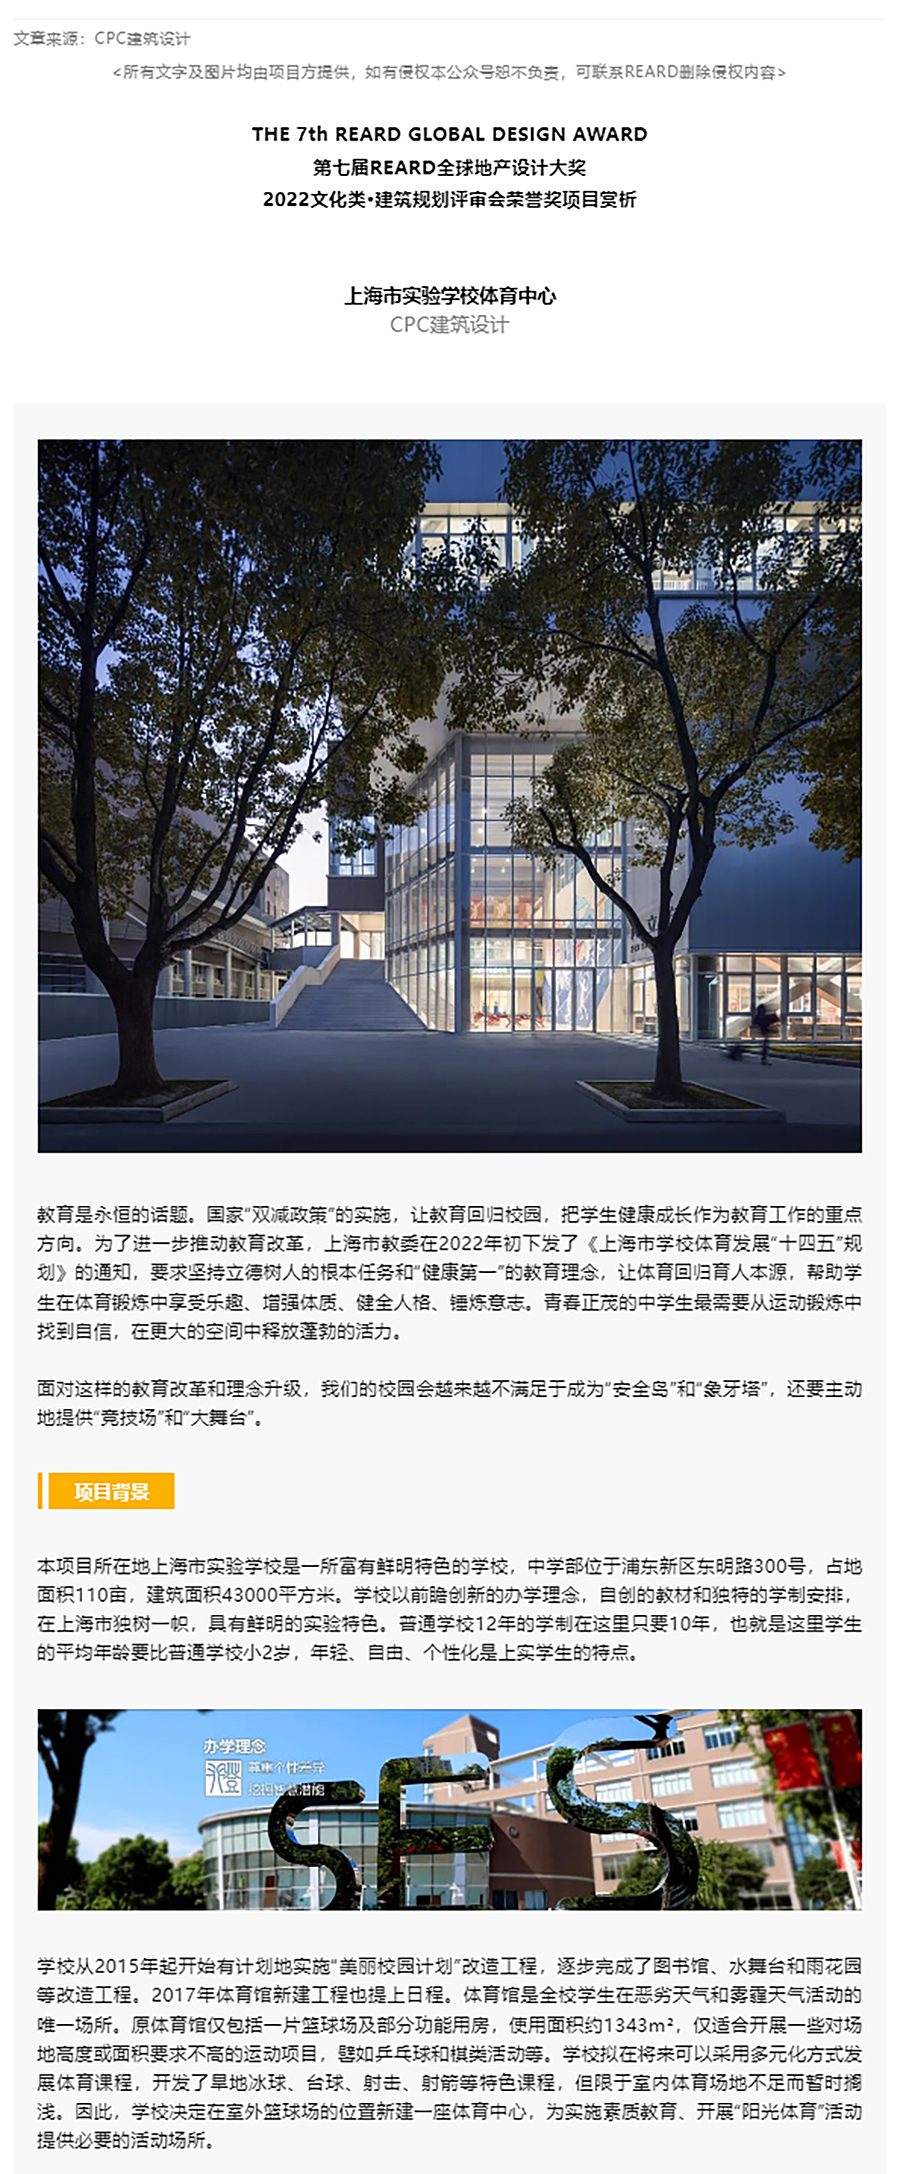 【2022REARD获奖作品赏析】校园建筑-_-上海市实验学校体育中心_0000_图层-1 拷贝.jpg